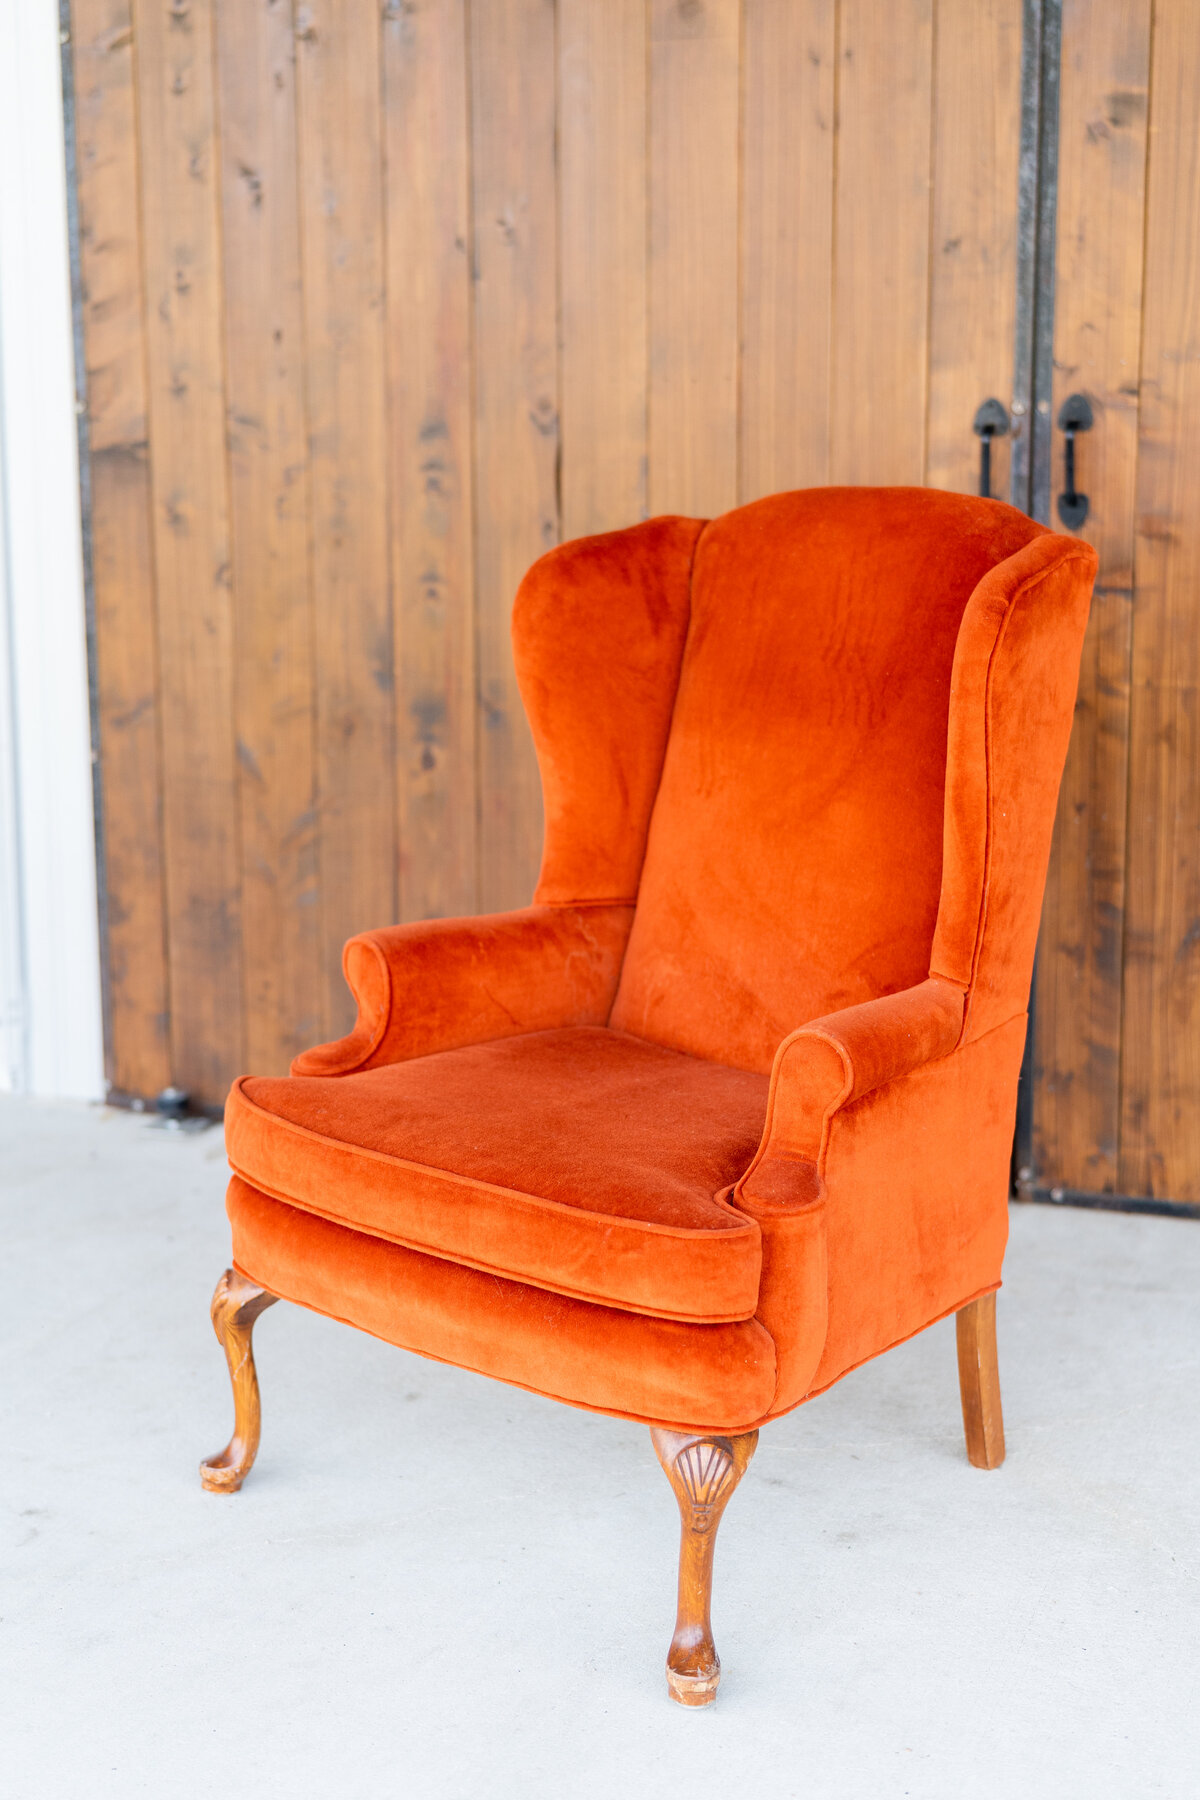 Clementine Chair